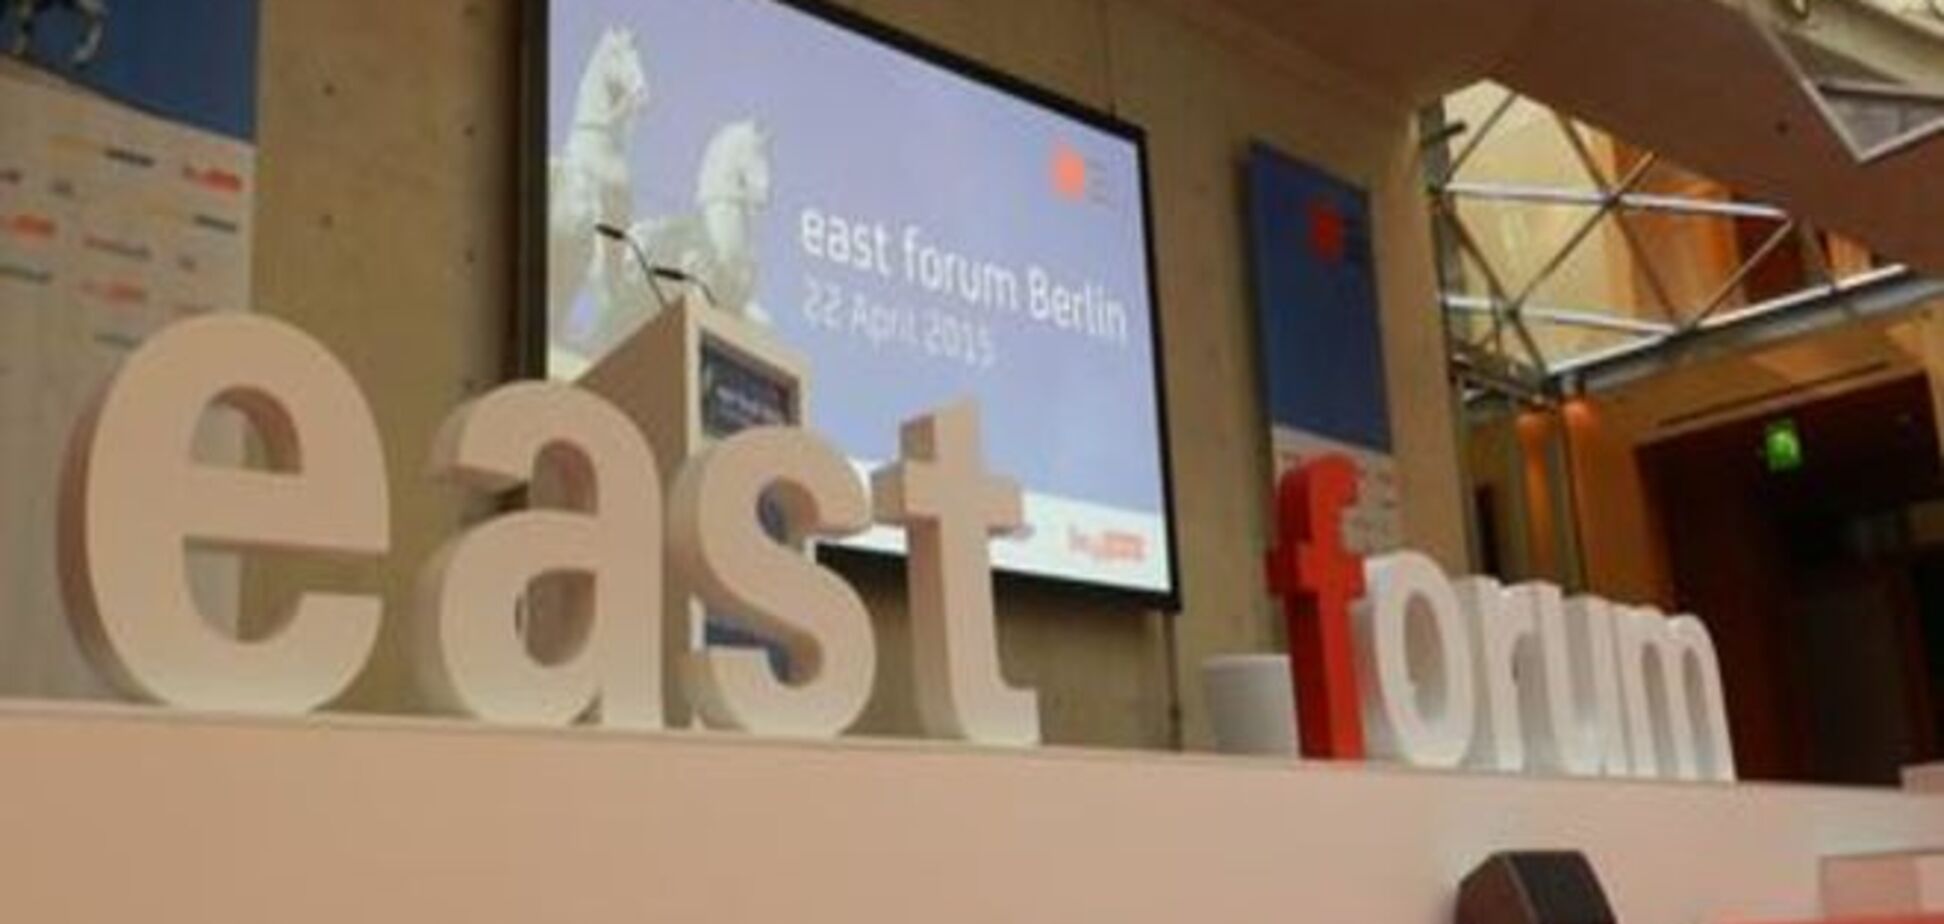 East forum Berlin: пелена санкций на фоне кризиса на Украине